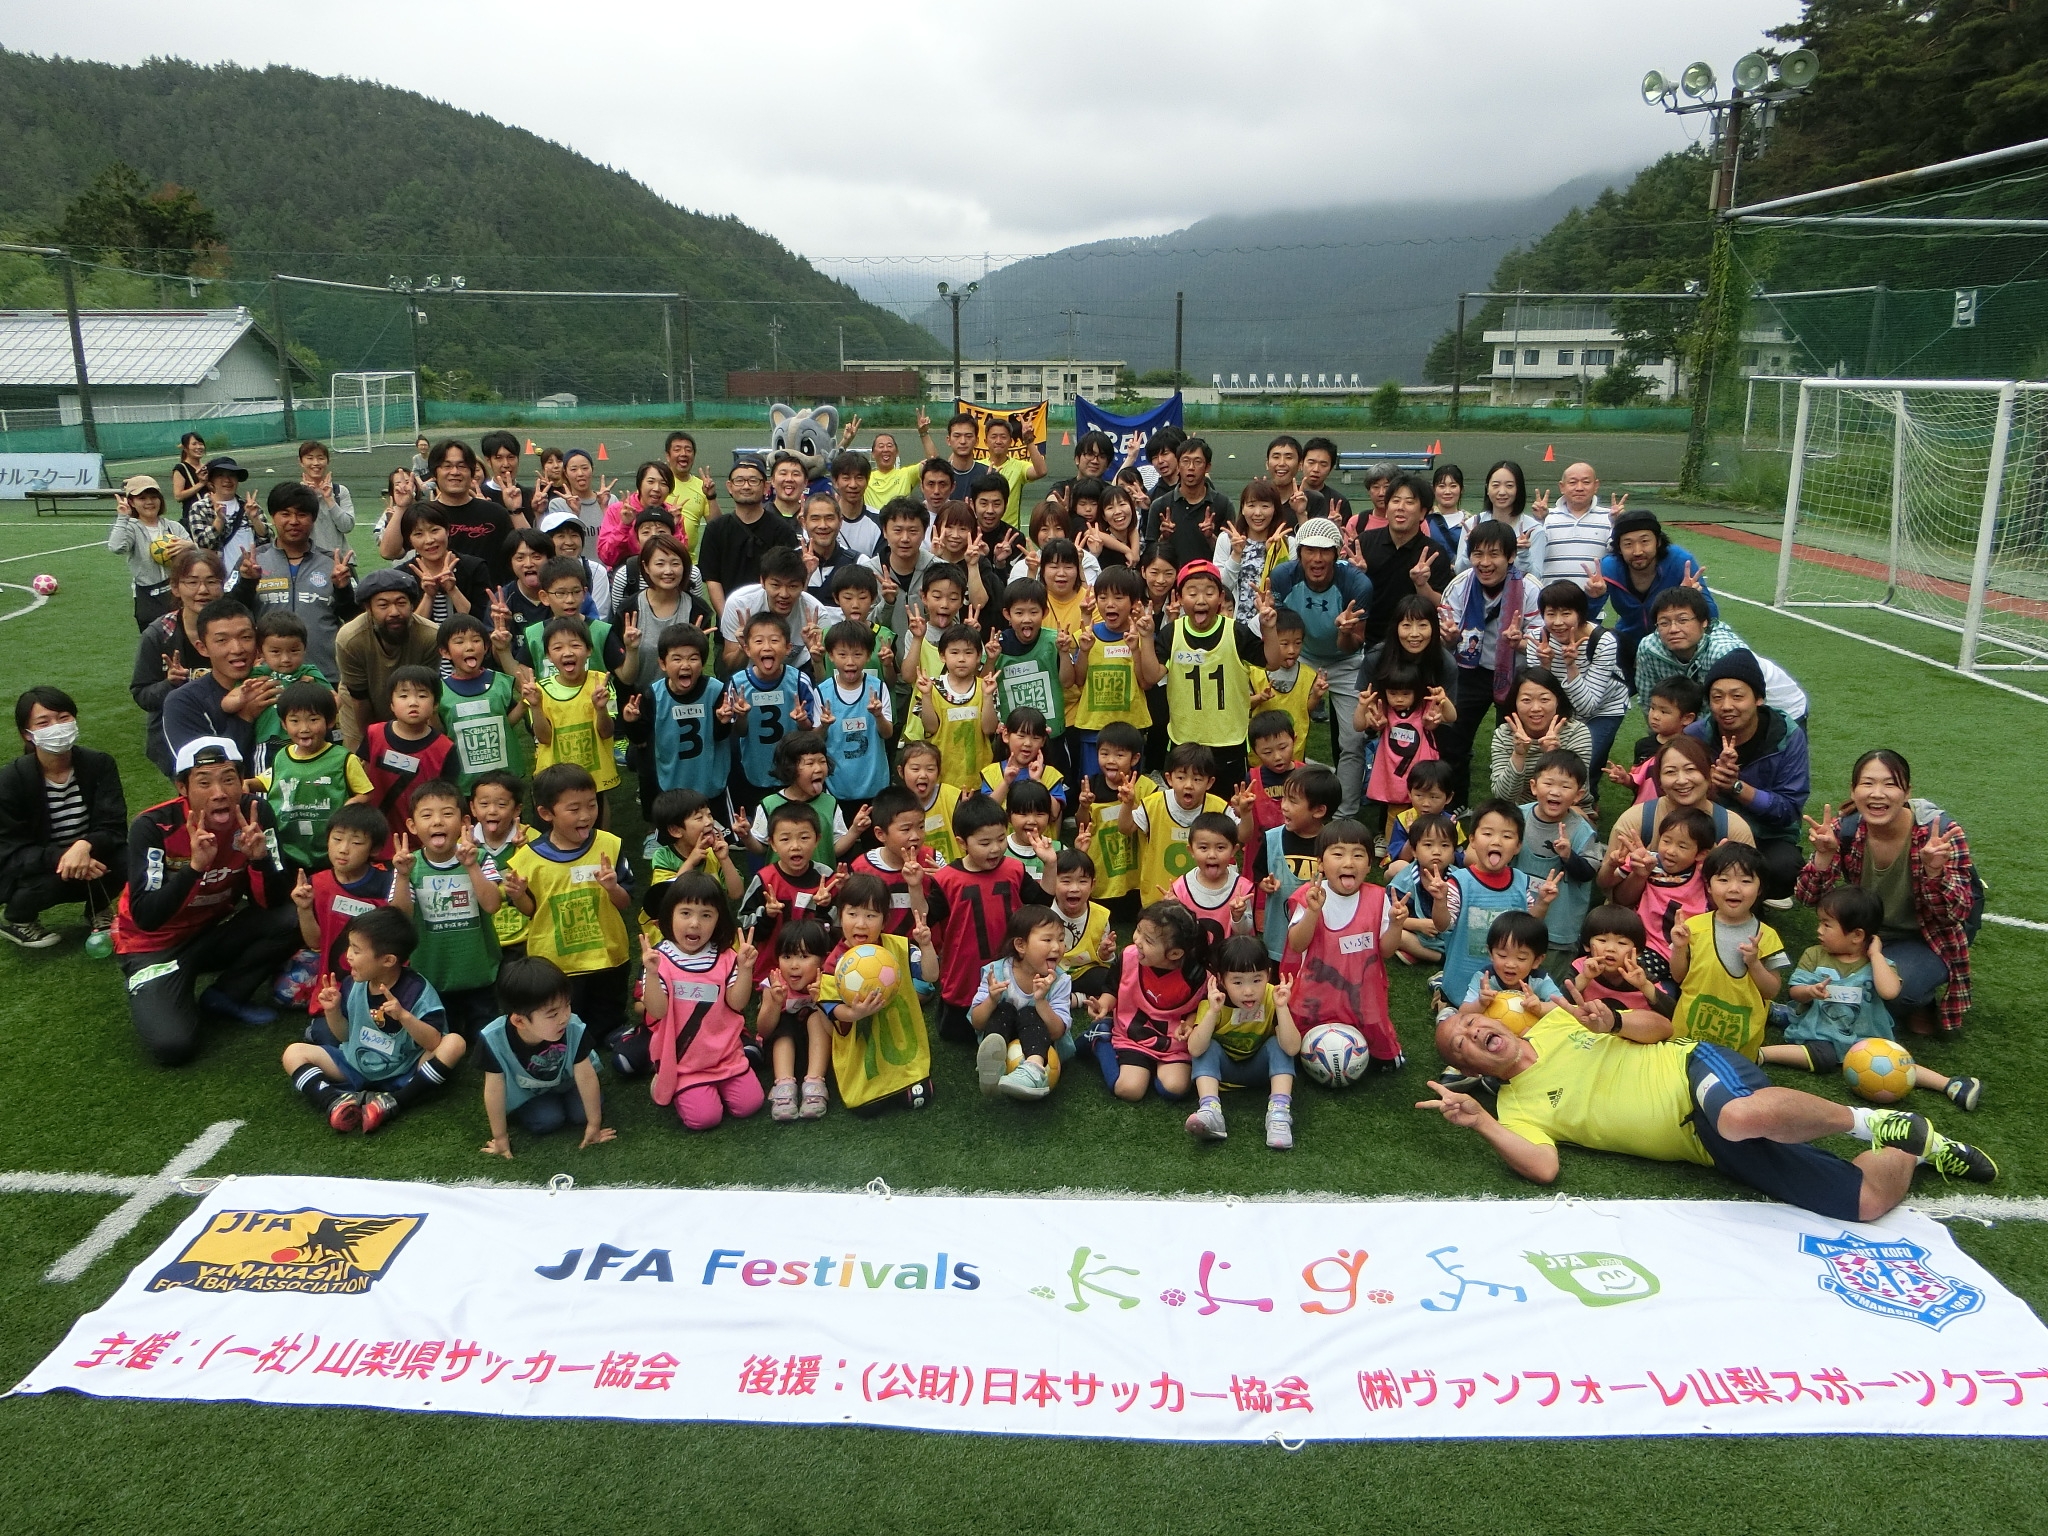 JFAキッズ（U-6/8）サッカーフェスティバル in 西桂町三つ峠グリーンセンター